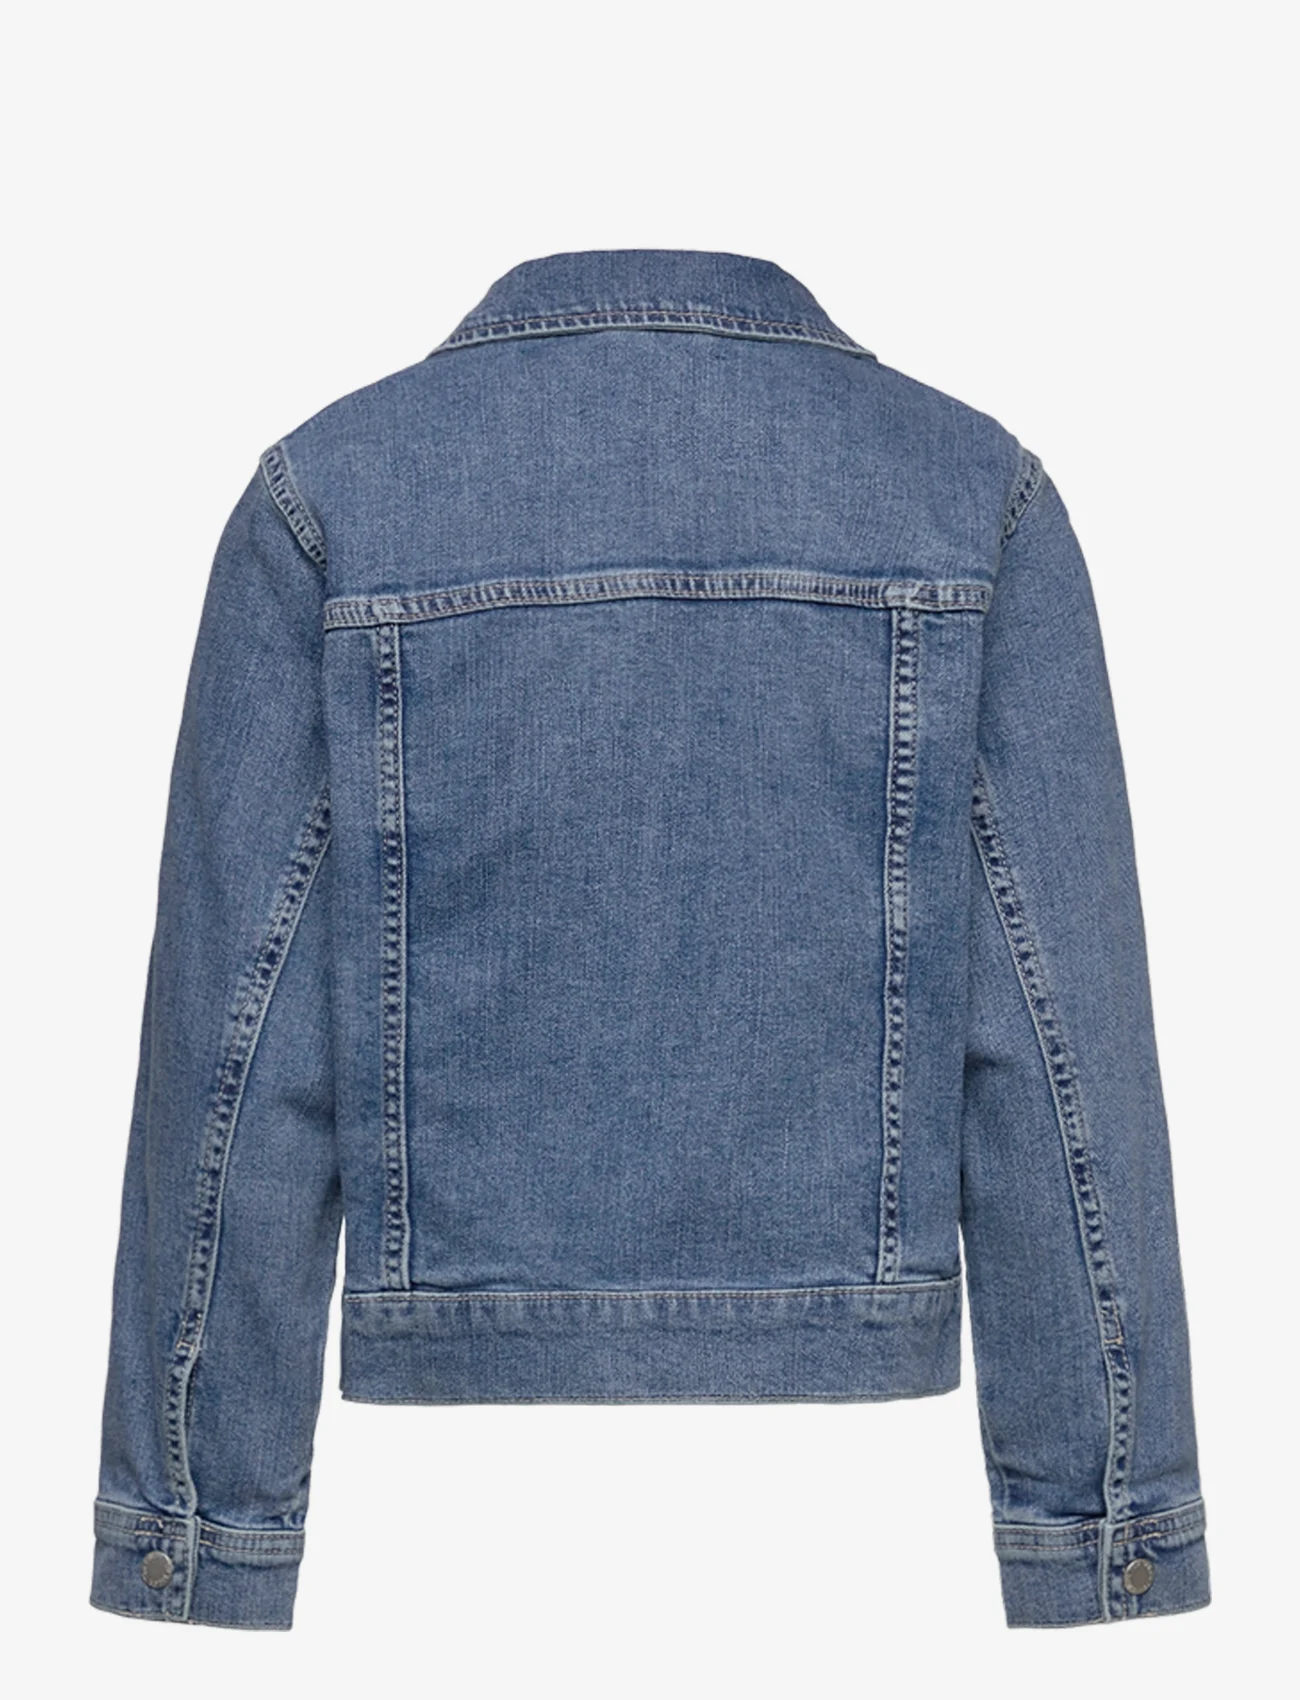 Tom Tailor - denim jacket - spring jackets - used mid stone blue denim - 1